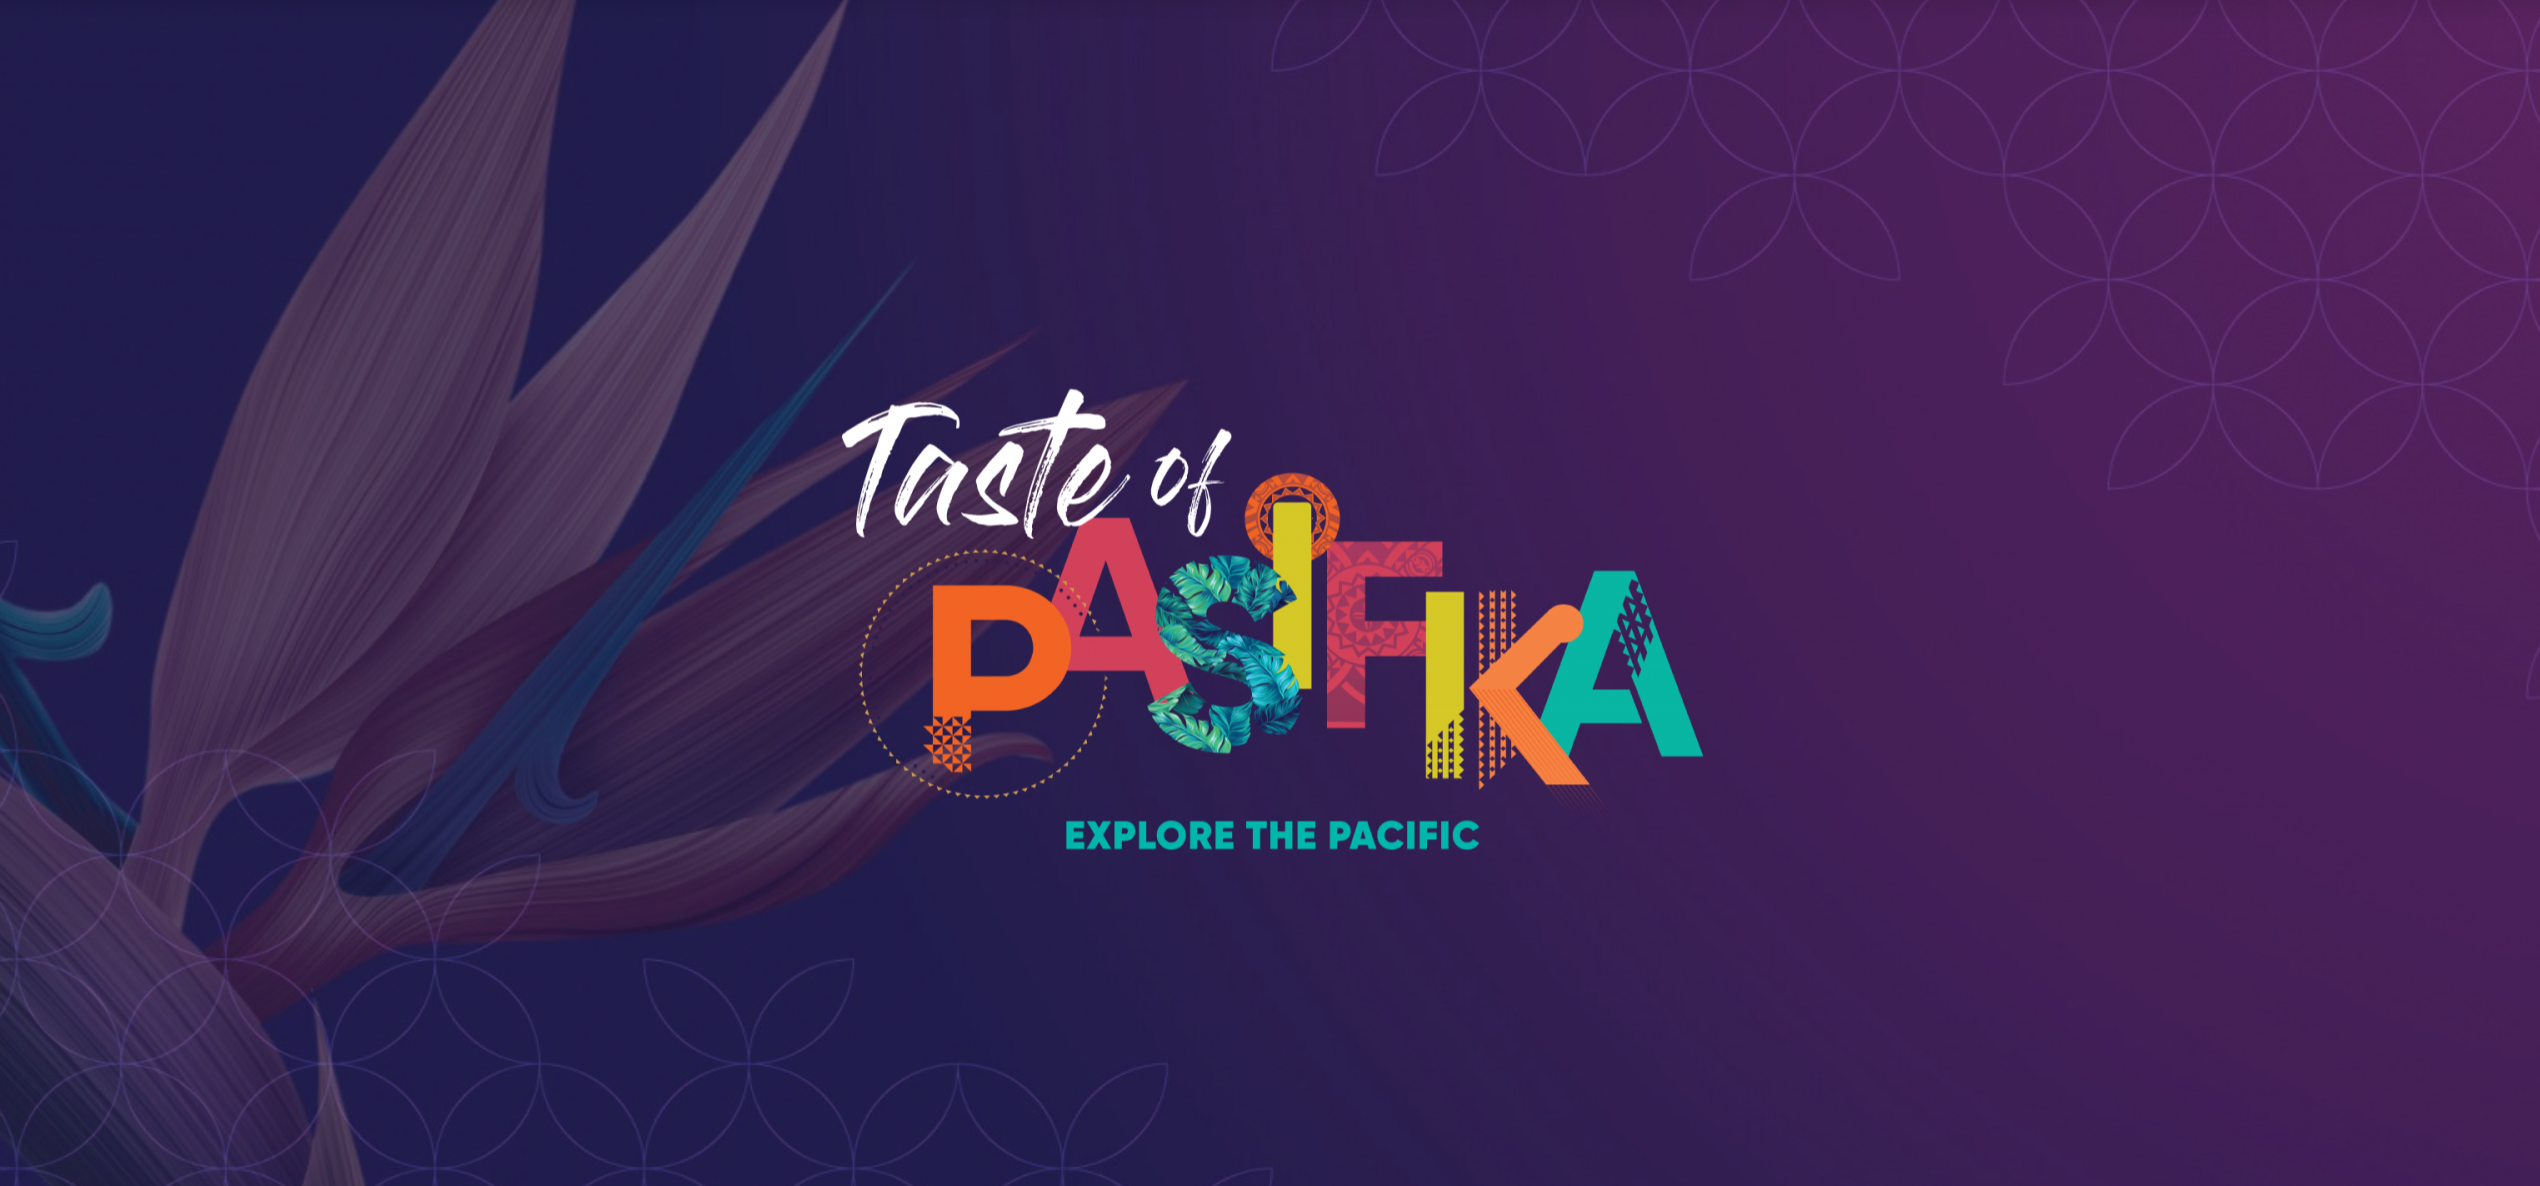 Taste of Pasifika Festival launches in Tāmaki Makaurau Auckland this June